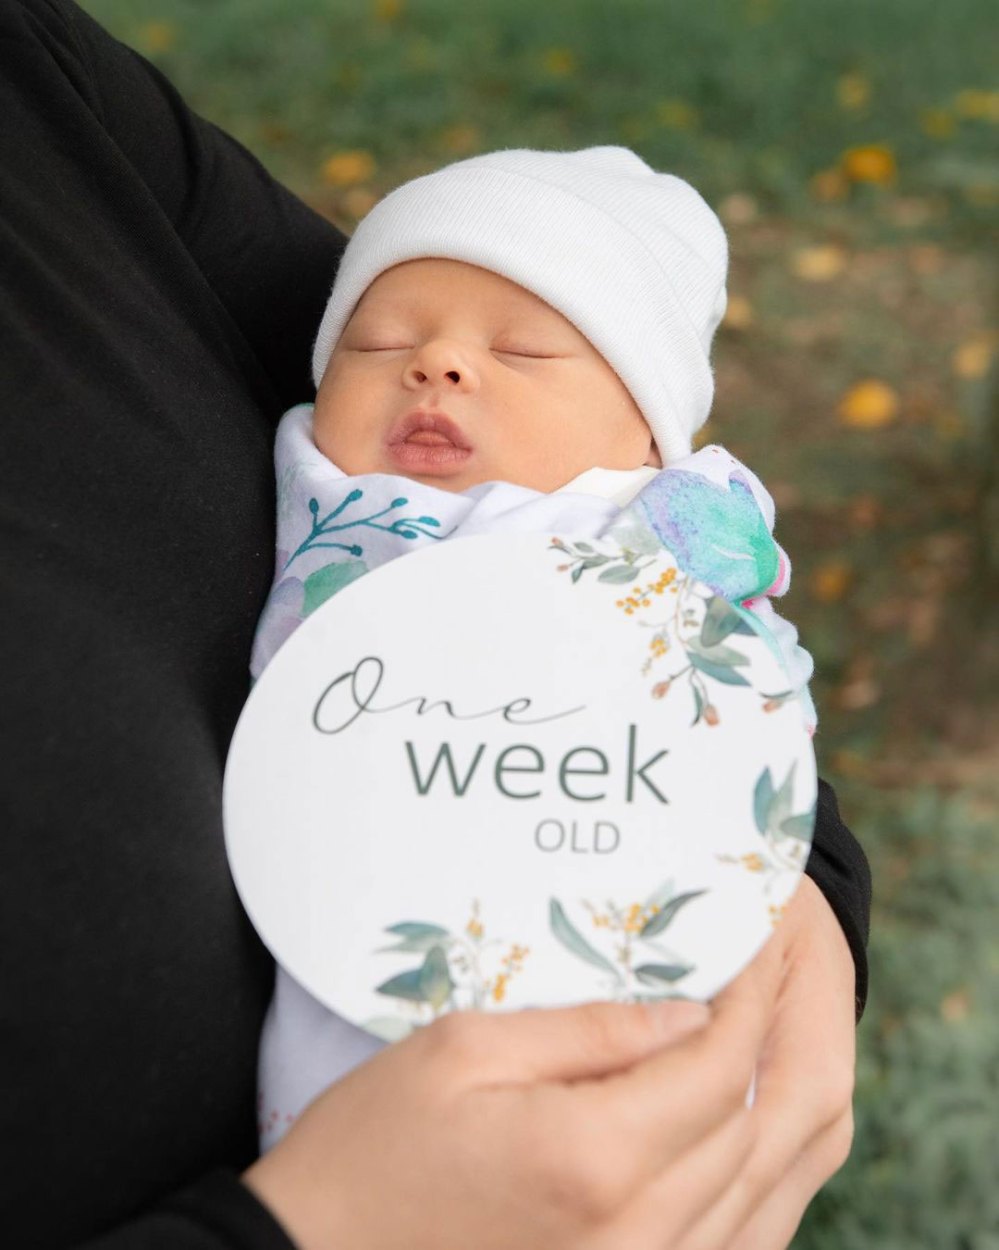 Bindi Irwin and Chandler Powell Celebrate Daughter Grace 1st Week Instagram